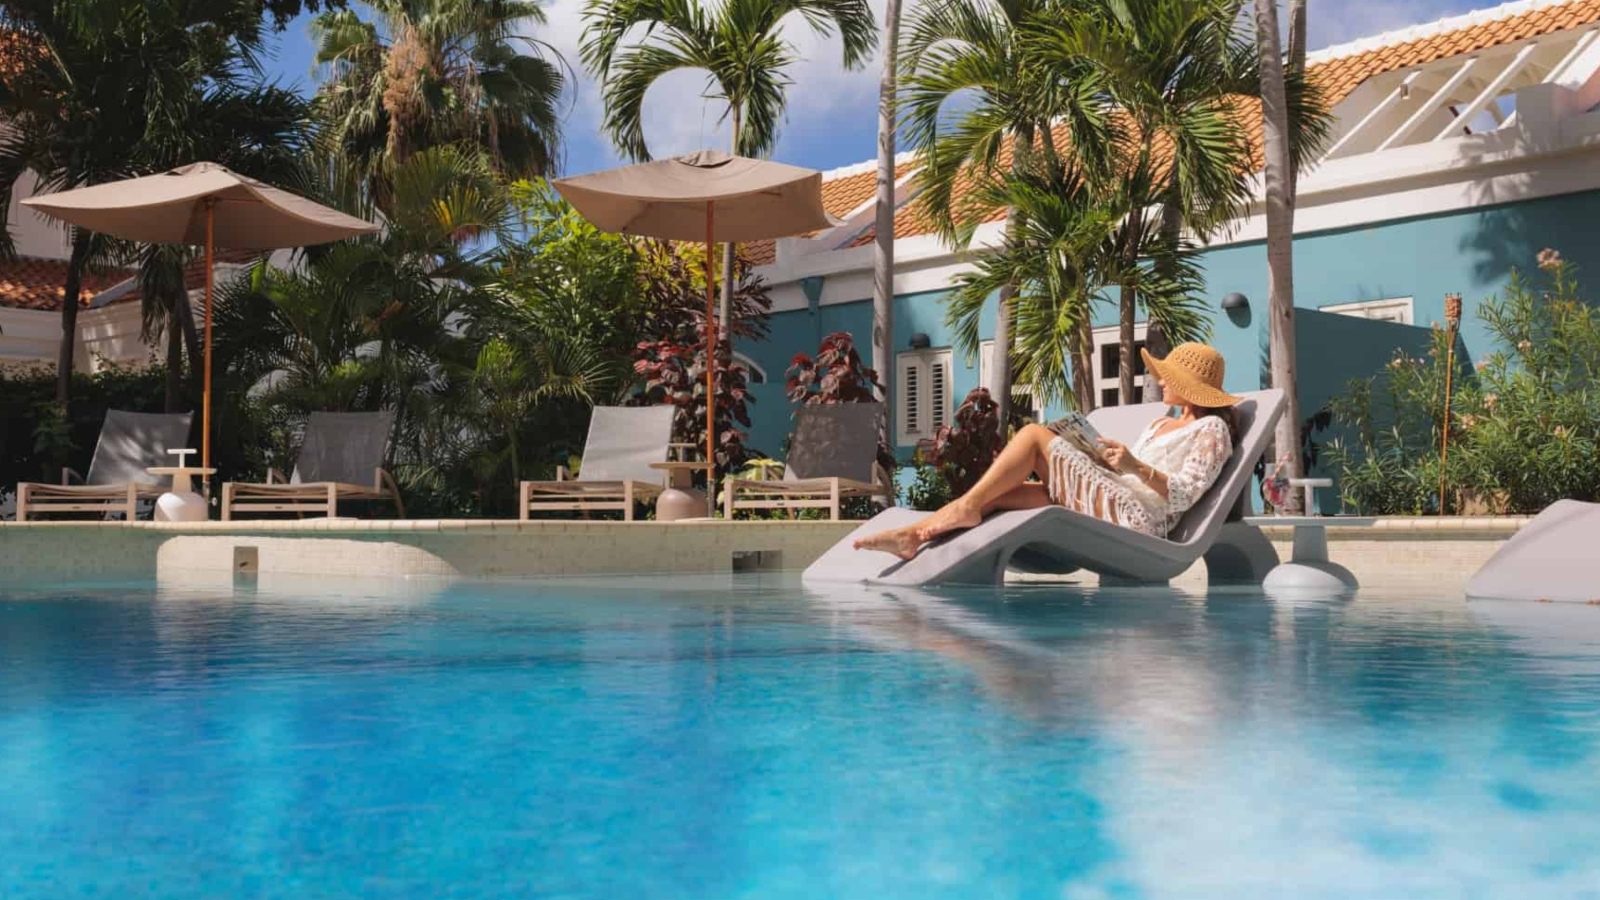 Kura Botanica Curacao hotel pool